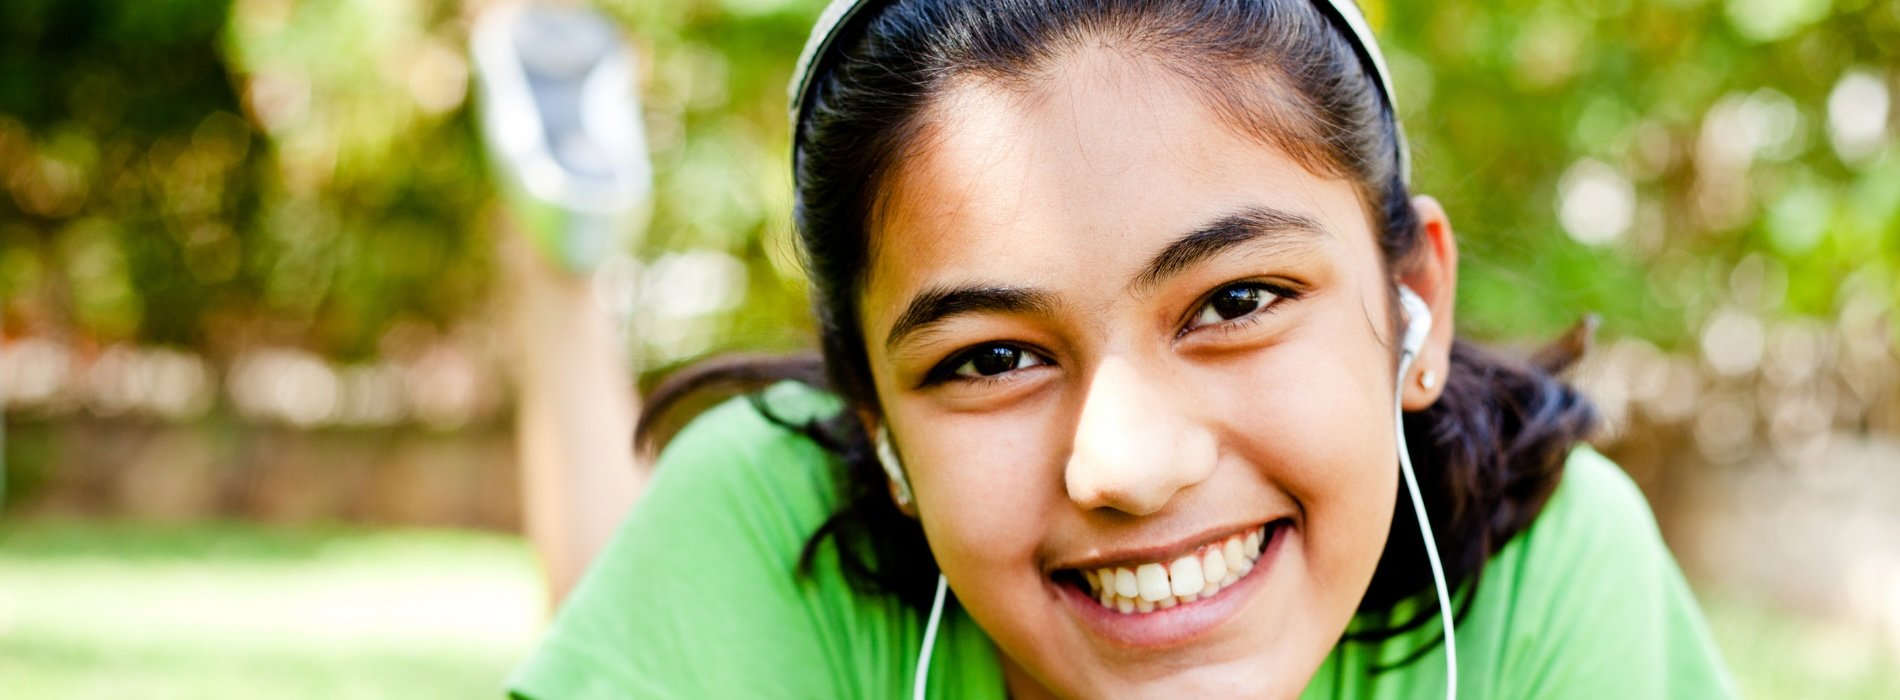 Smiling girl wearing headphones